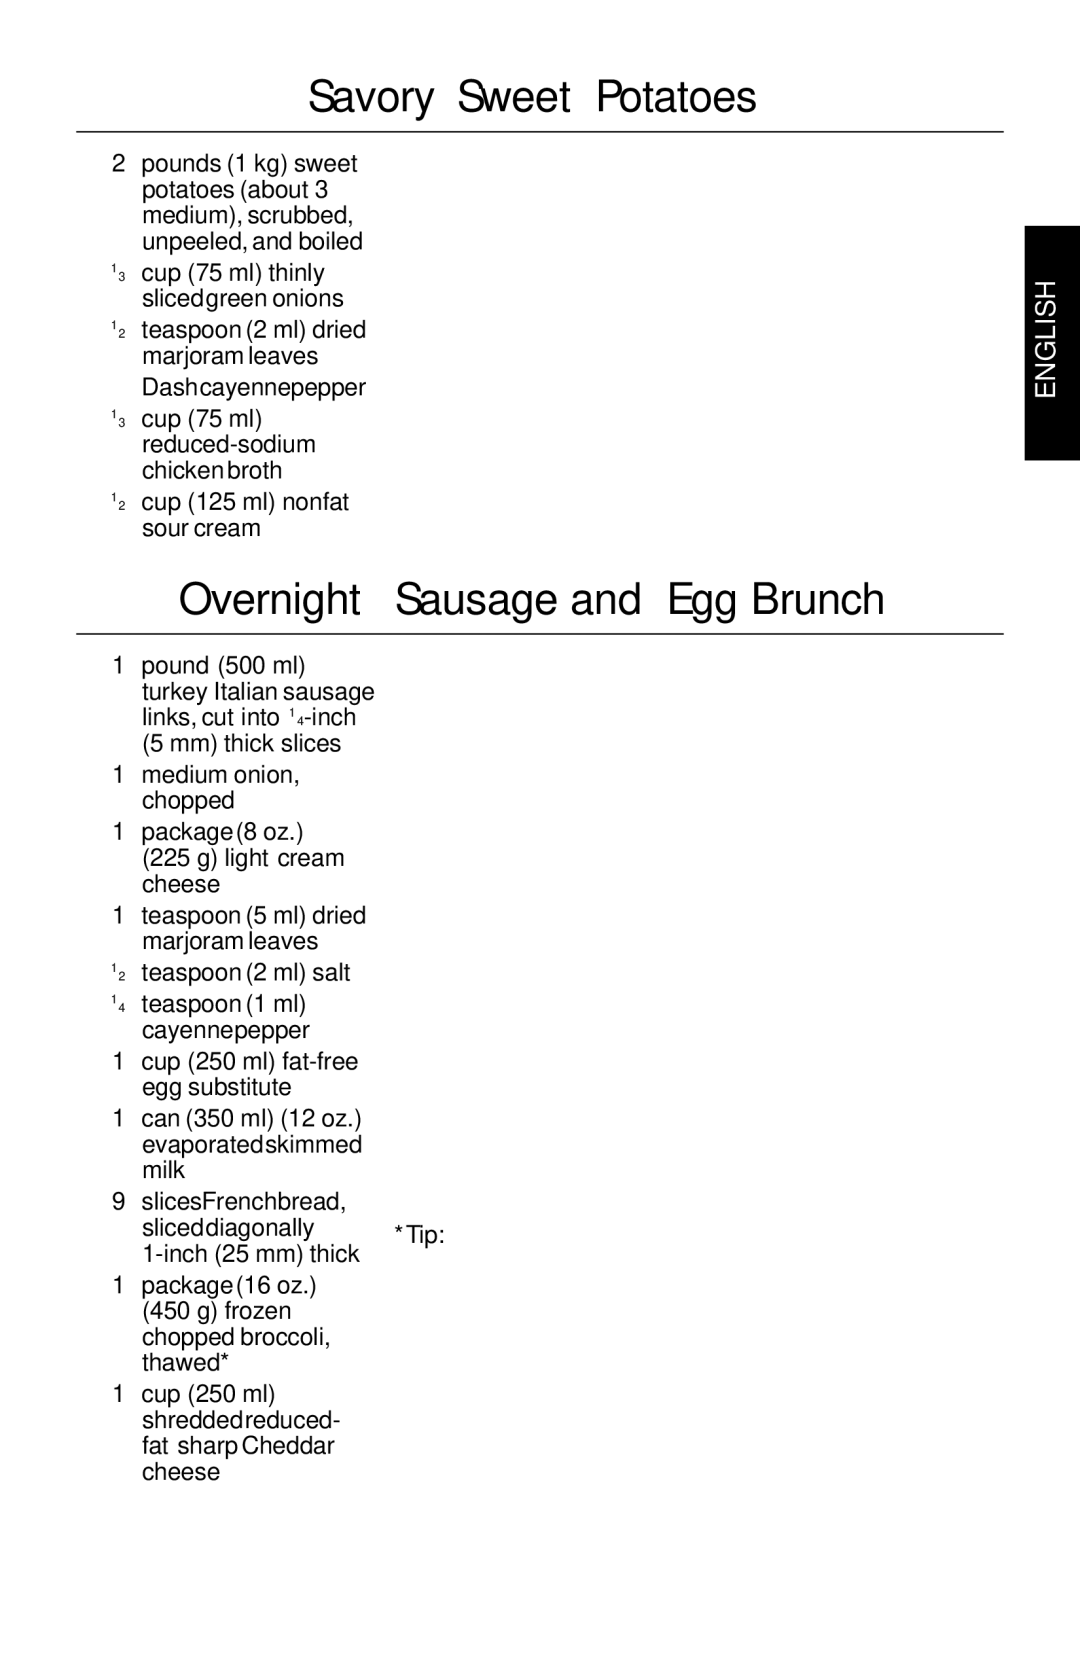 KitchenAid KHM7T, KHM9 manual Savory Sweet Potatoes, Overnight Sausage and Egg Brunch 